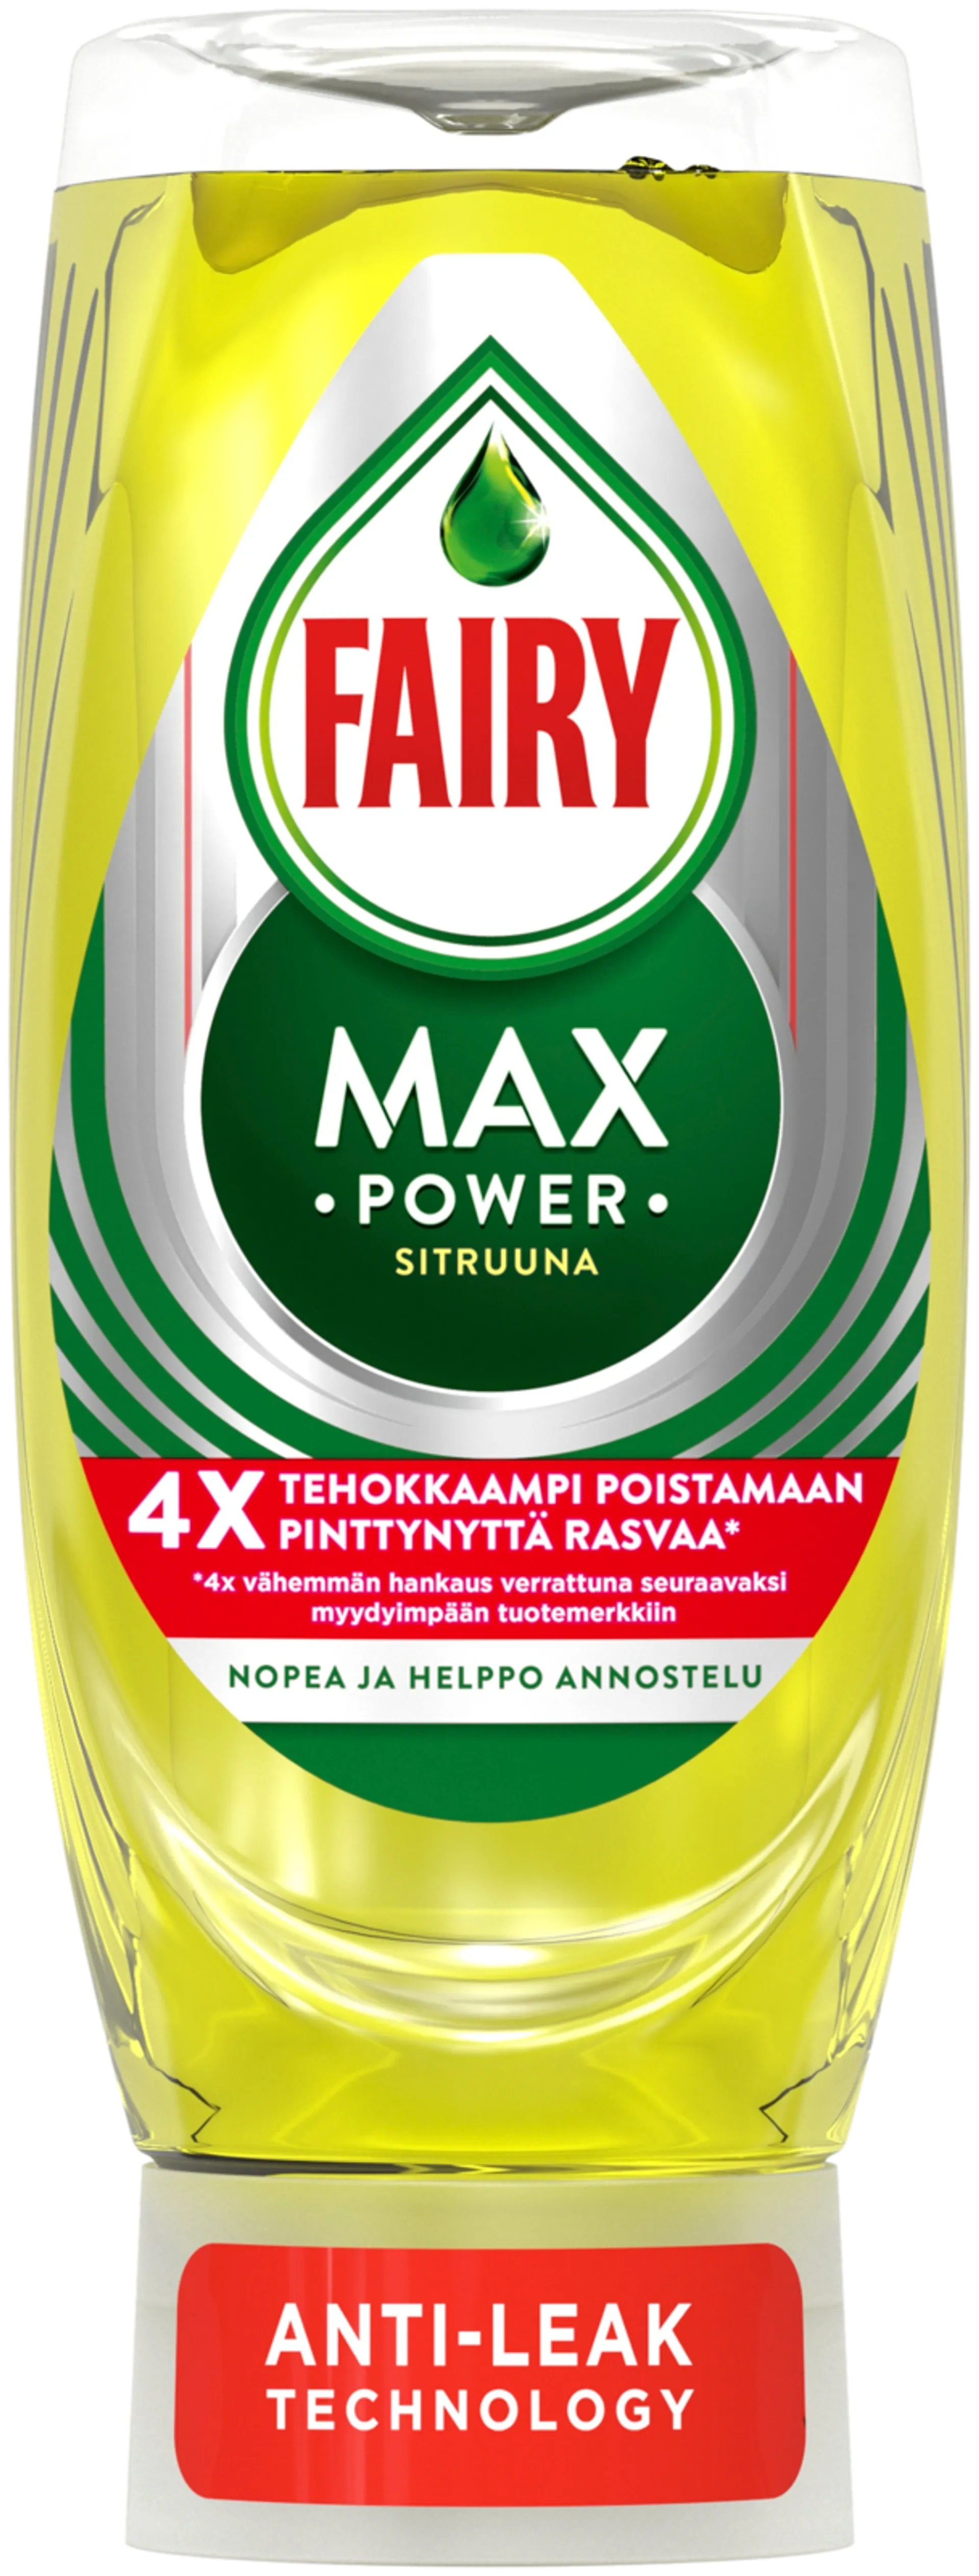 Fairy Max Power Sitruuna 450ml astianpesuaine